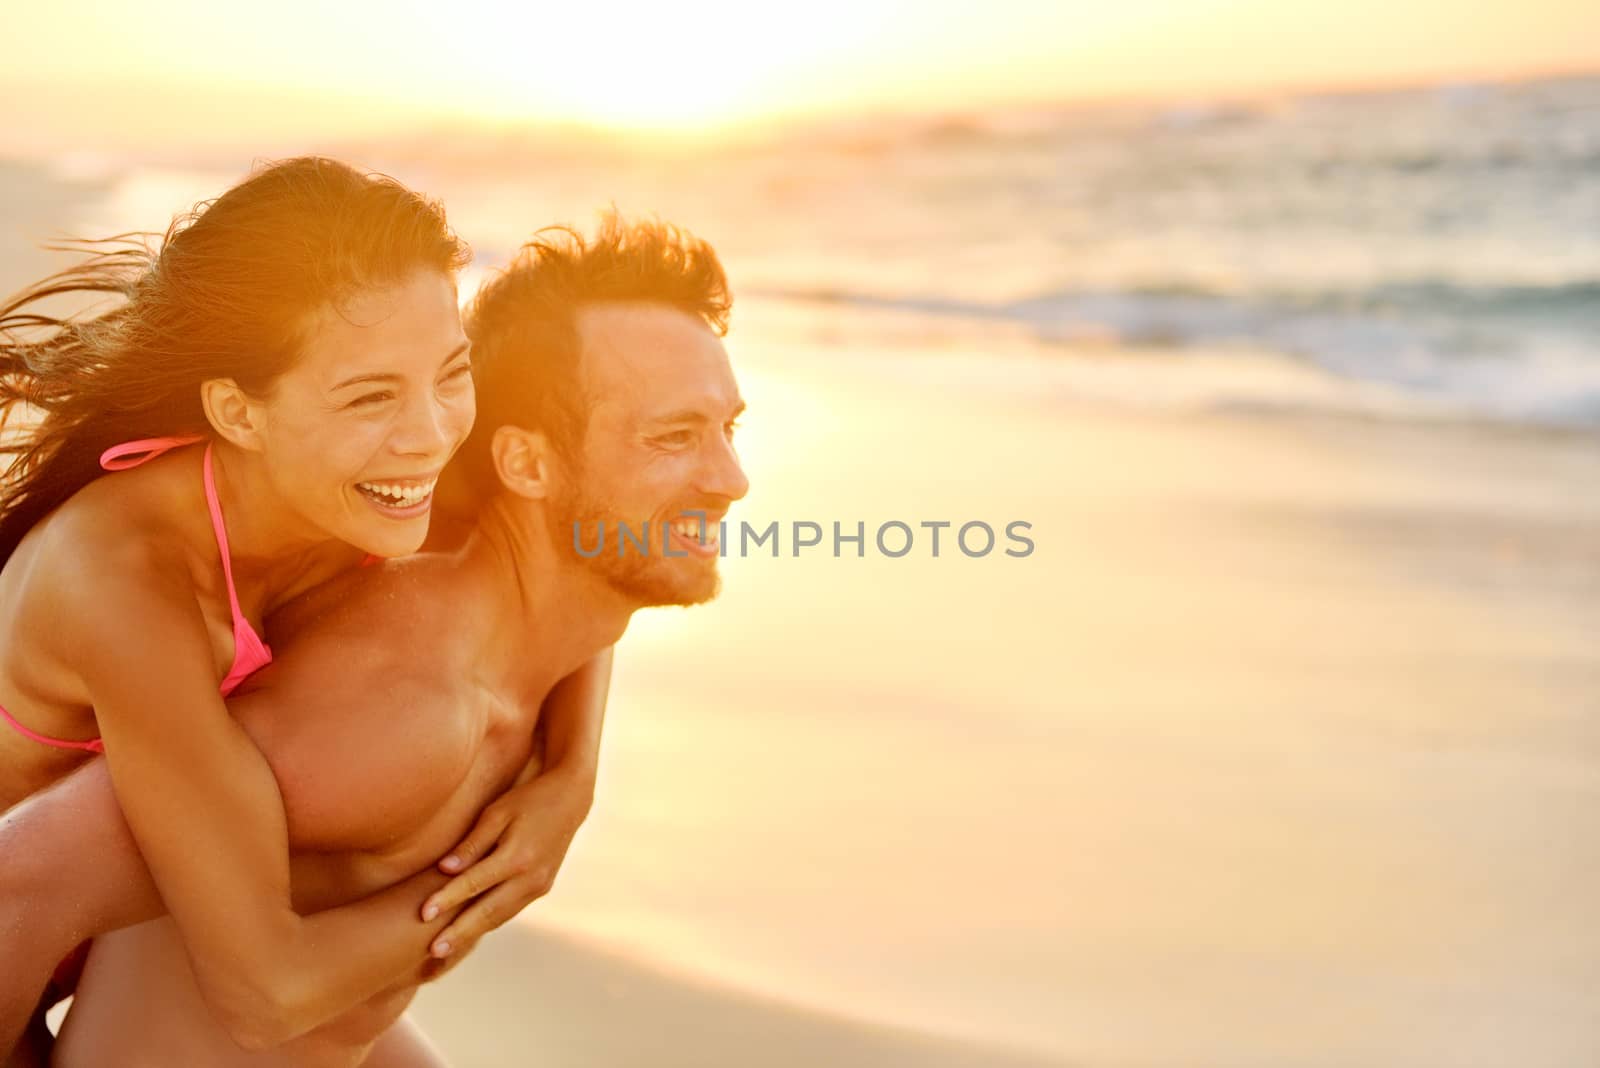 Lovers couple in love having fun on beach portrait by Maridav